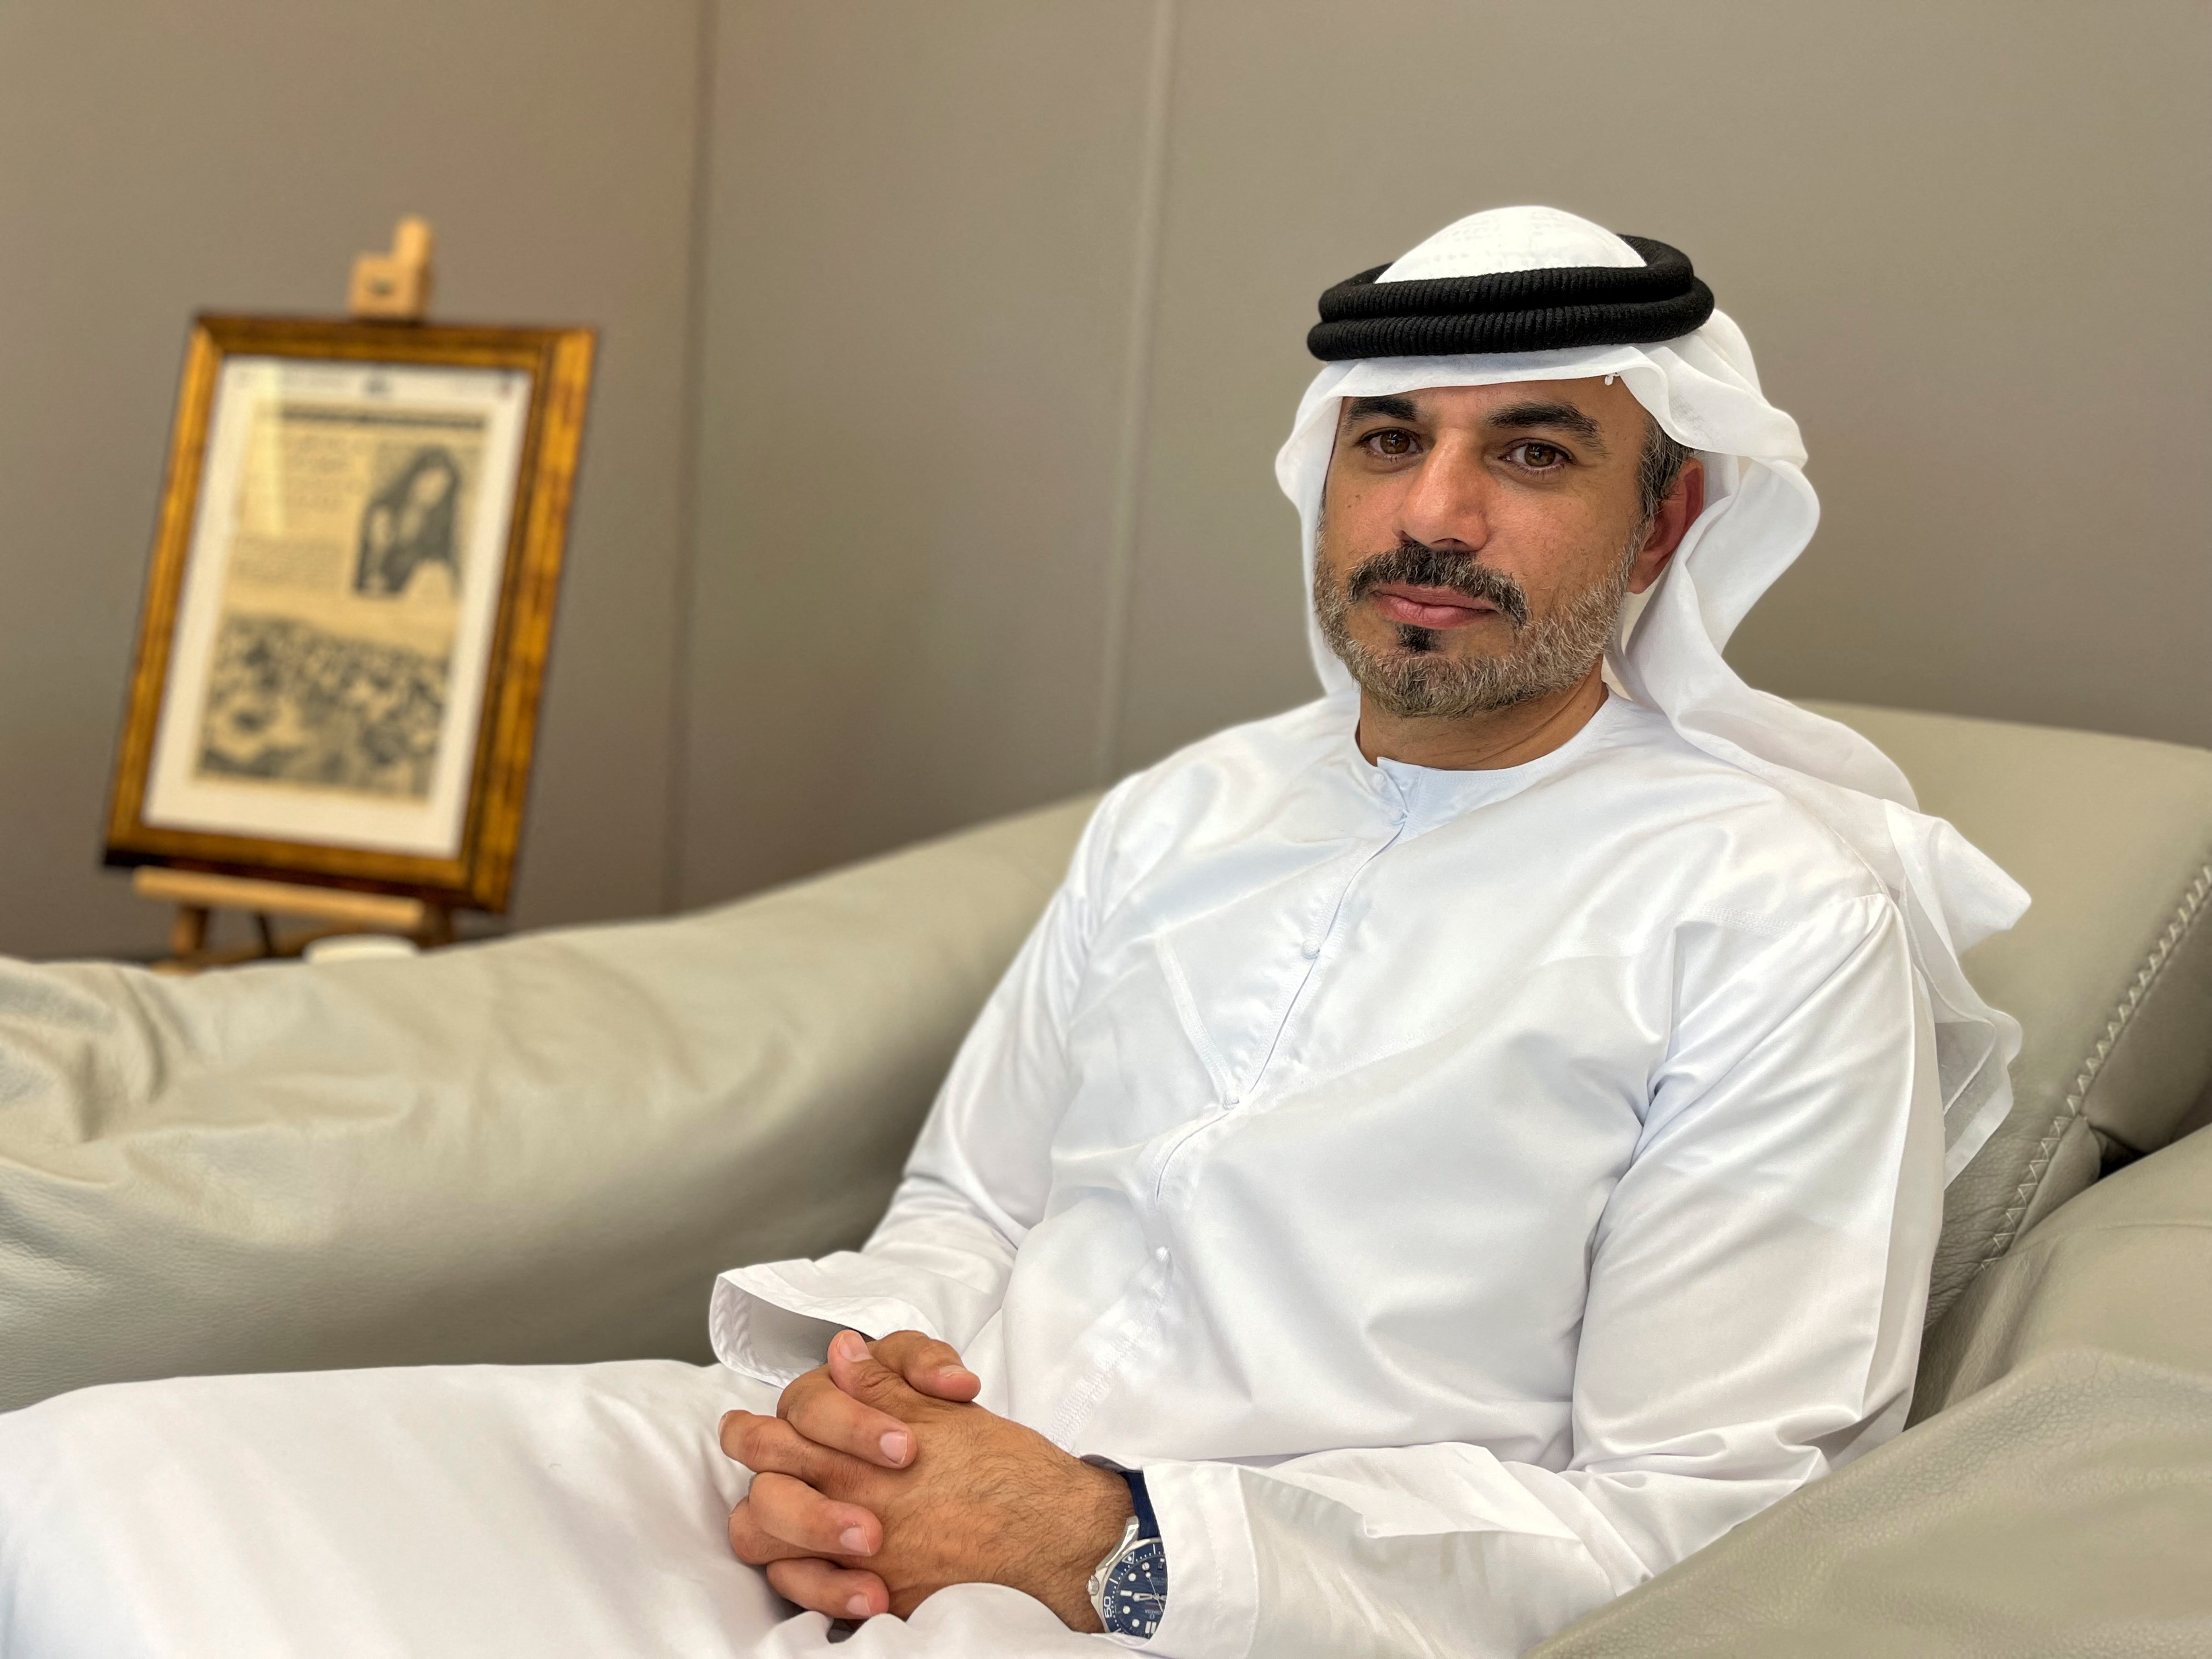 Hisham Khalid Malak, Chairman of the Abu Dhabi Securities Exchange, sits in his office in Abu Dhabi